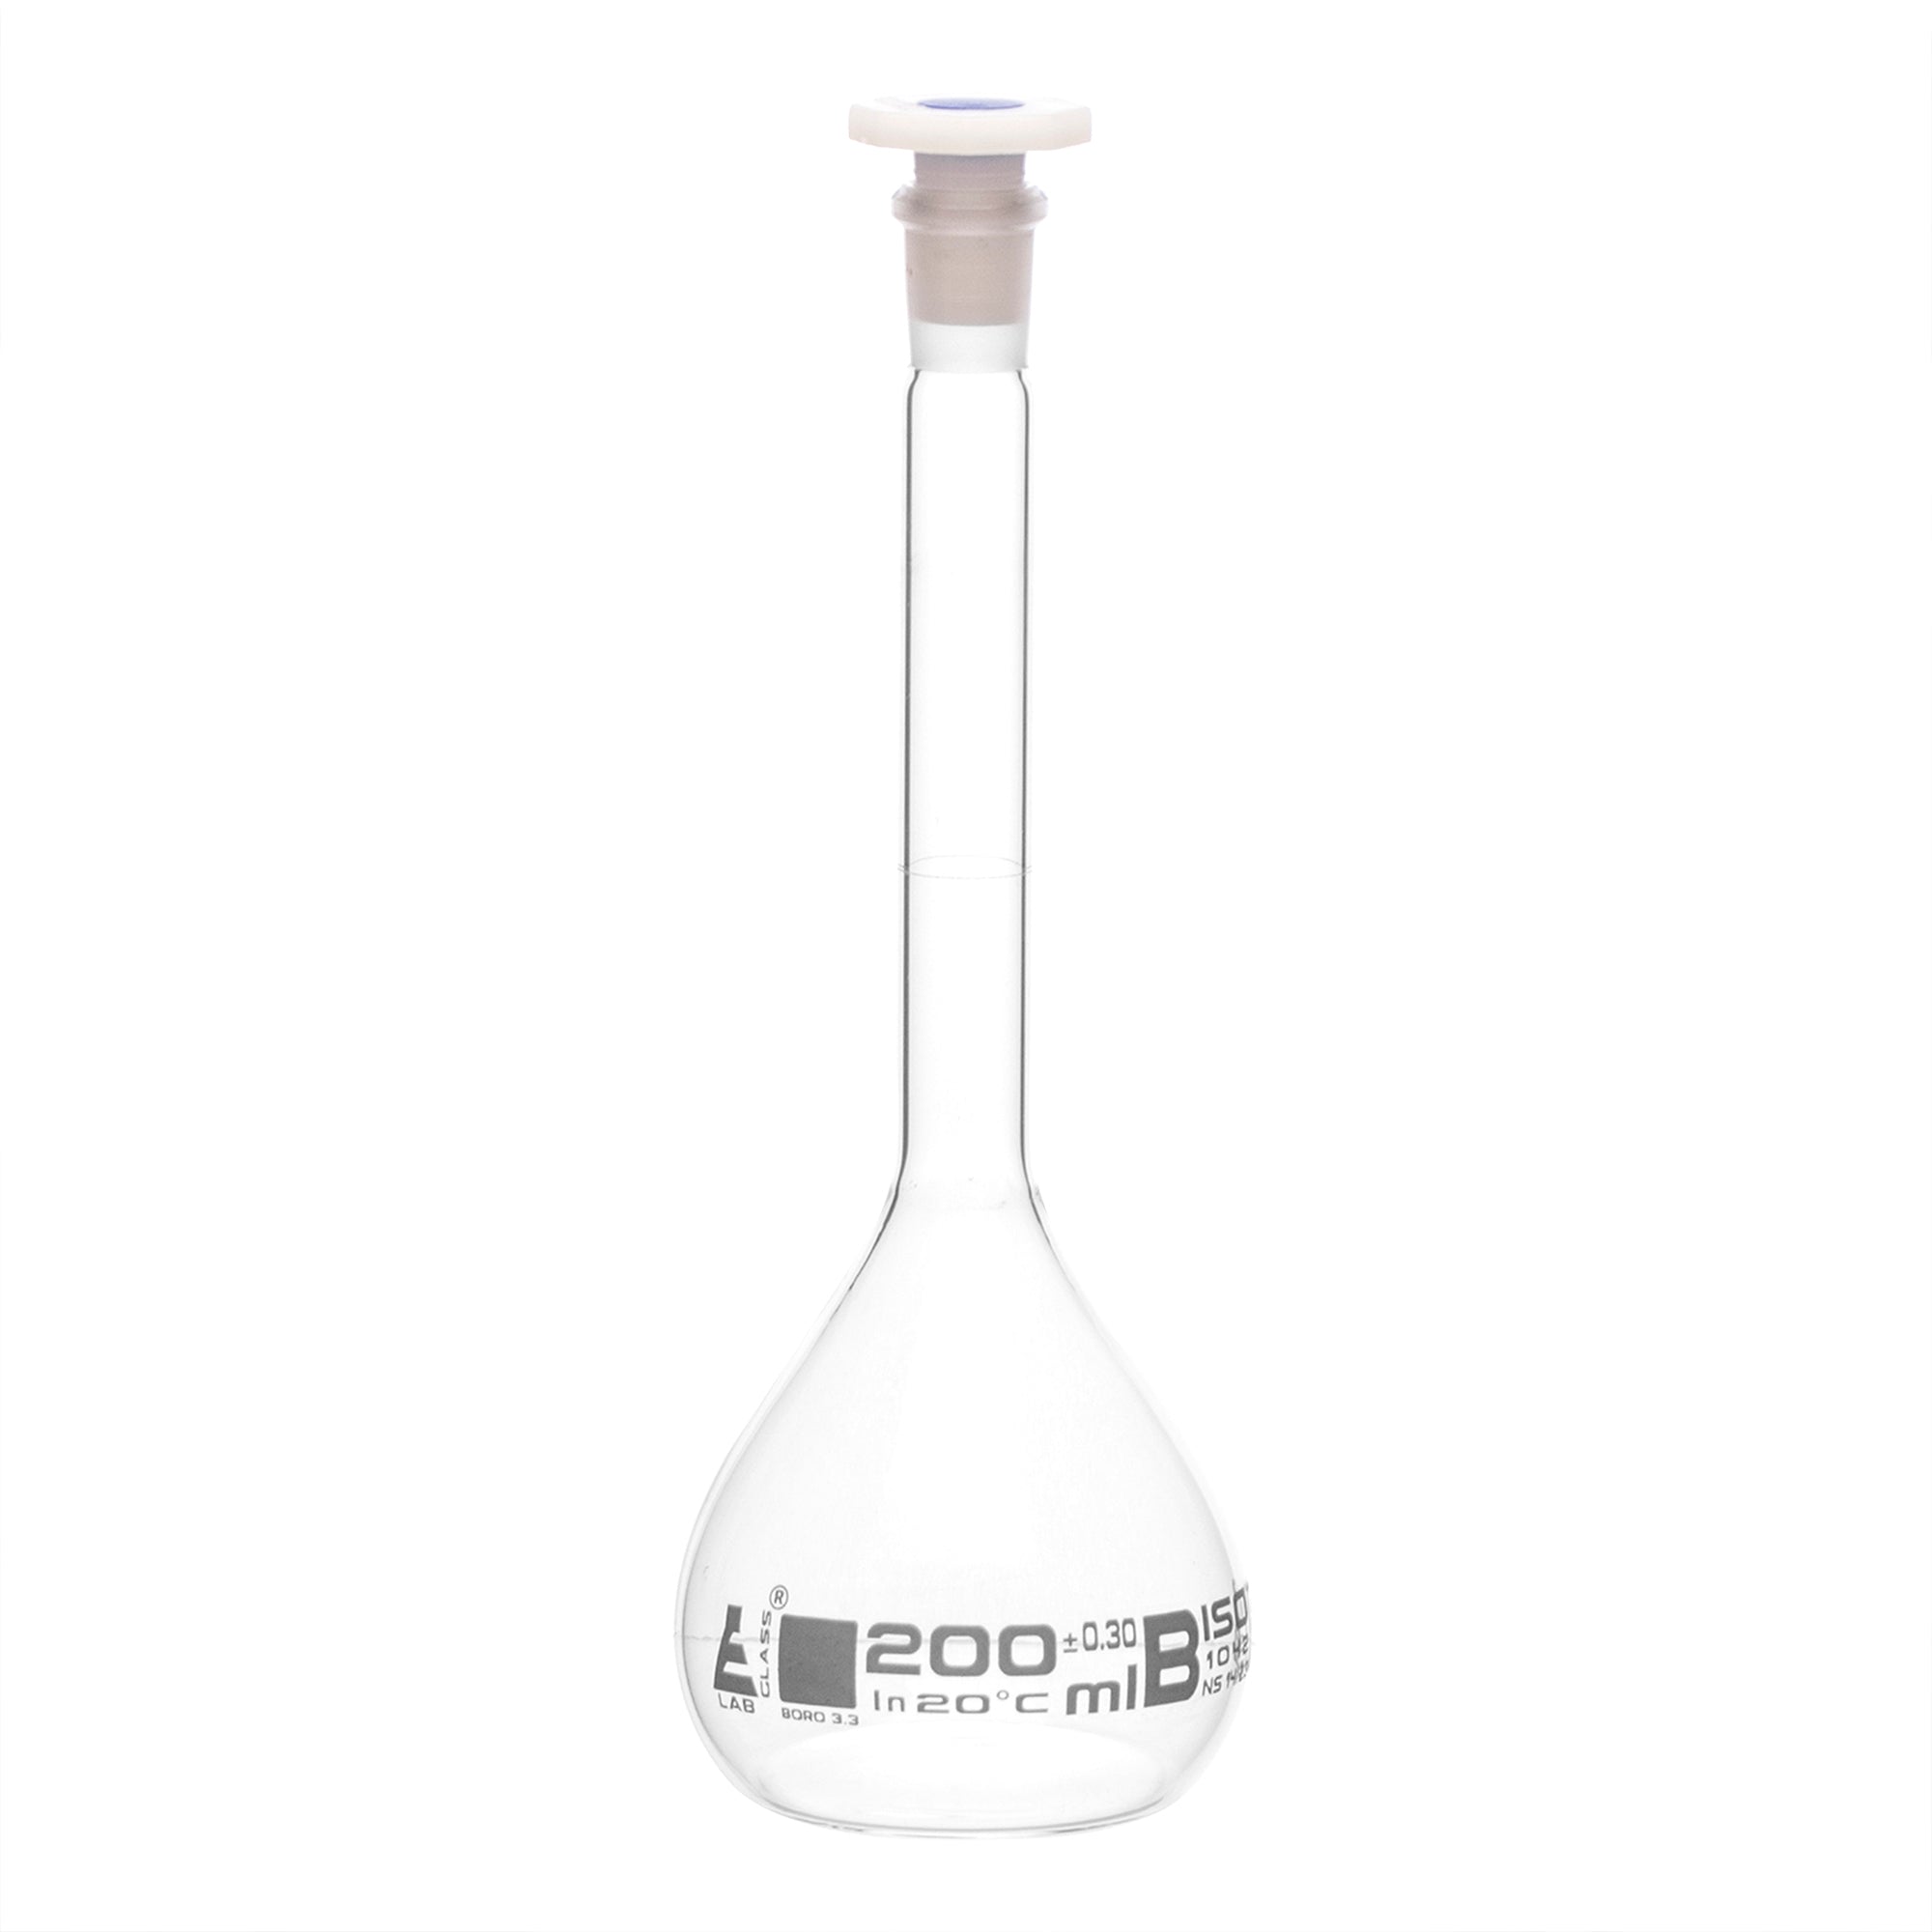 Borosilicate Glass Volumetric Flask with Polyethylene Stopper, 200ml, Class B, White Print, Autoclavable